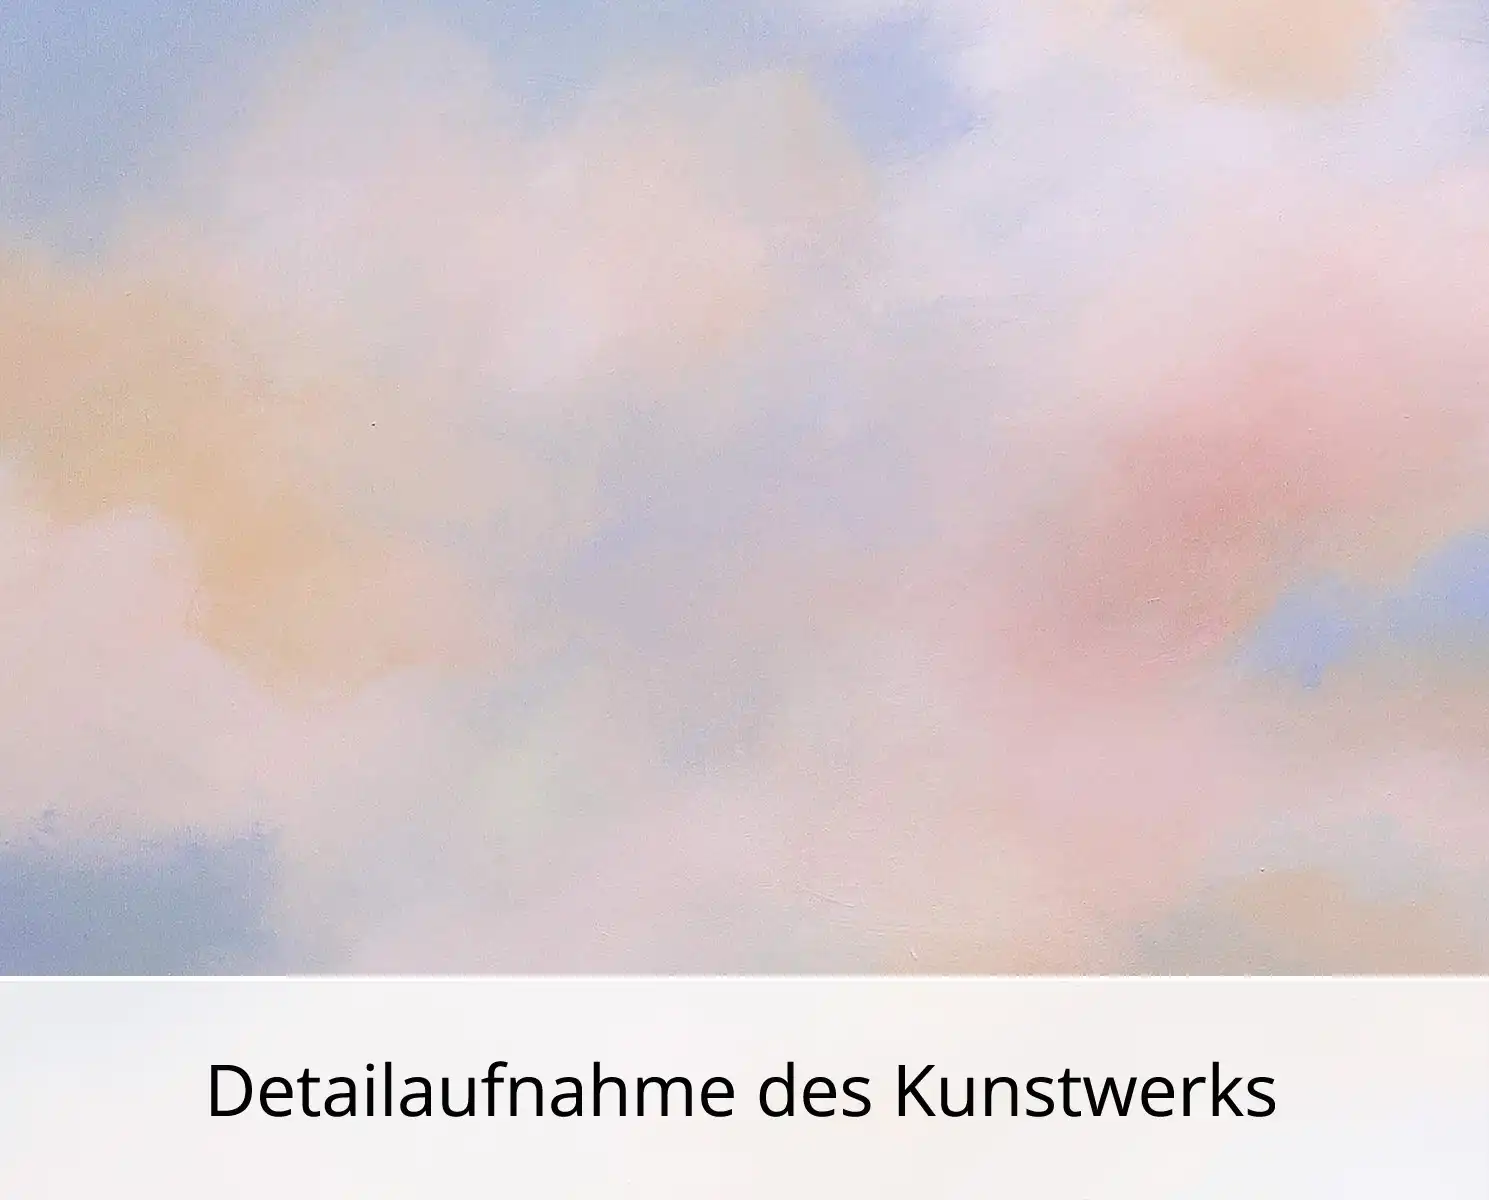 M. Kühne: "Orange Light", Edition, signierter Kunstdruck, Nr. 1/100